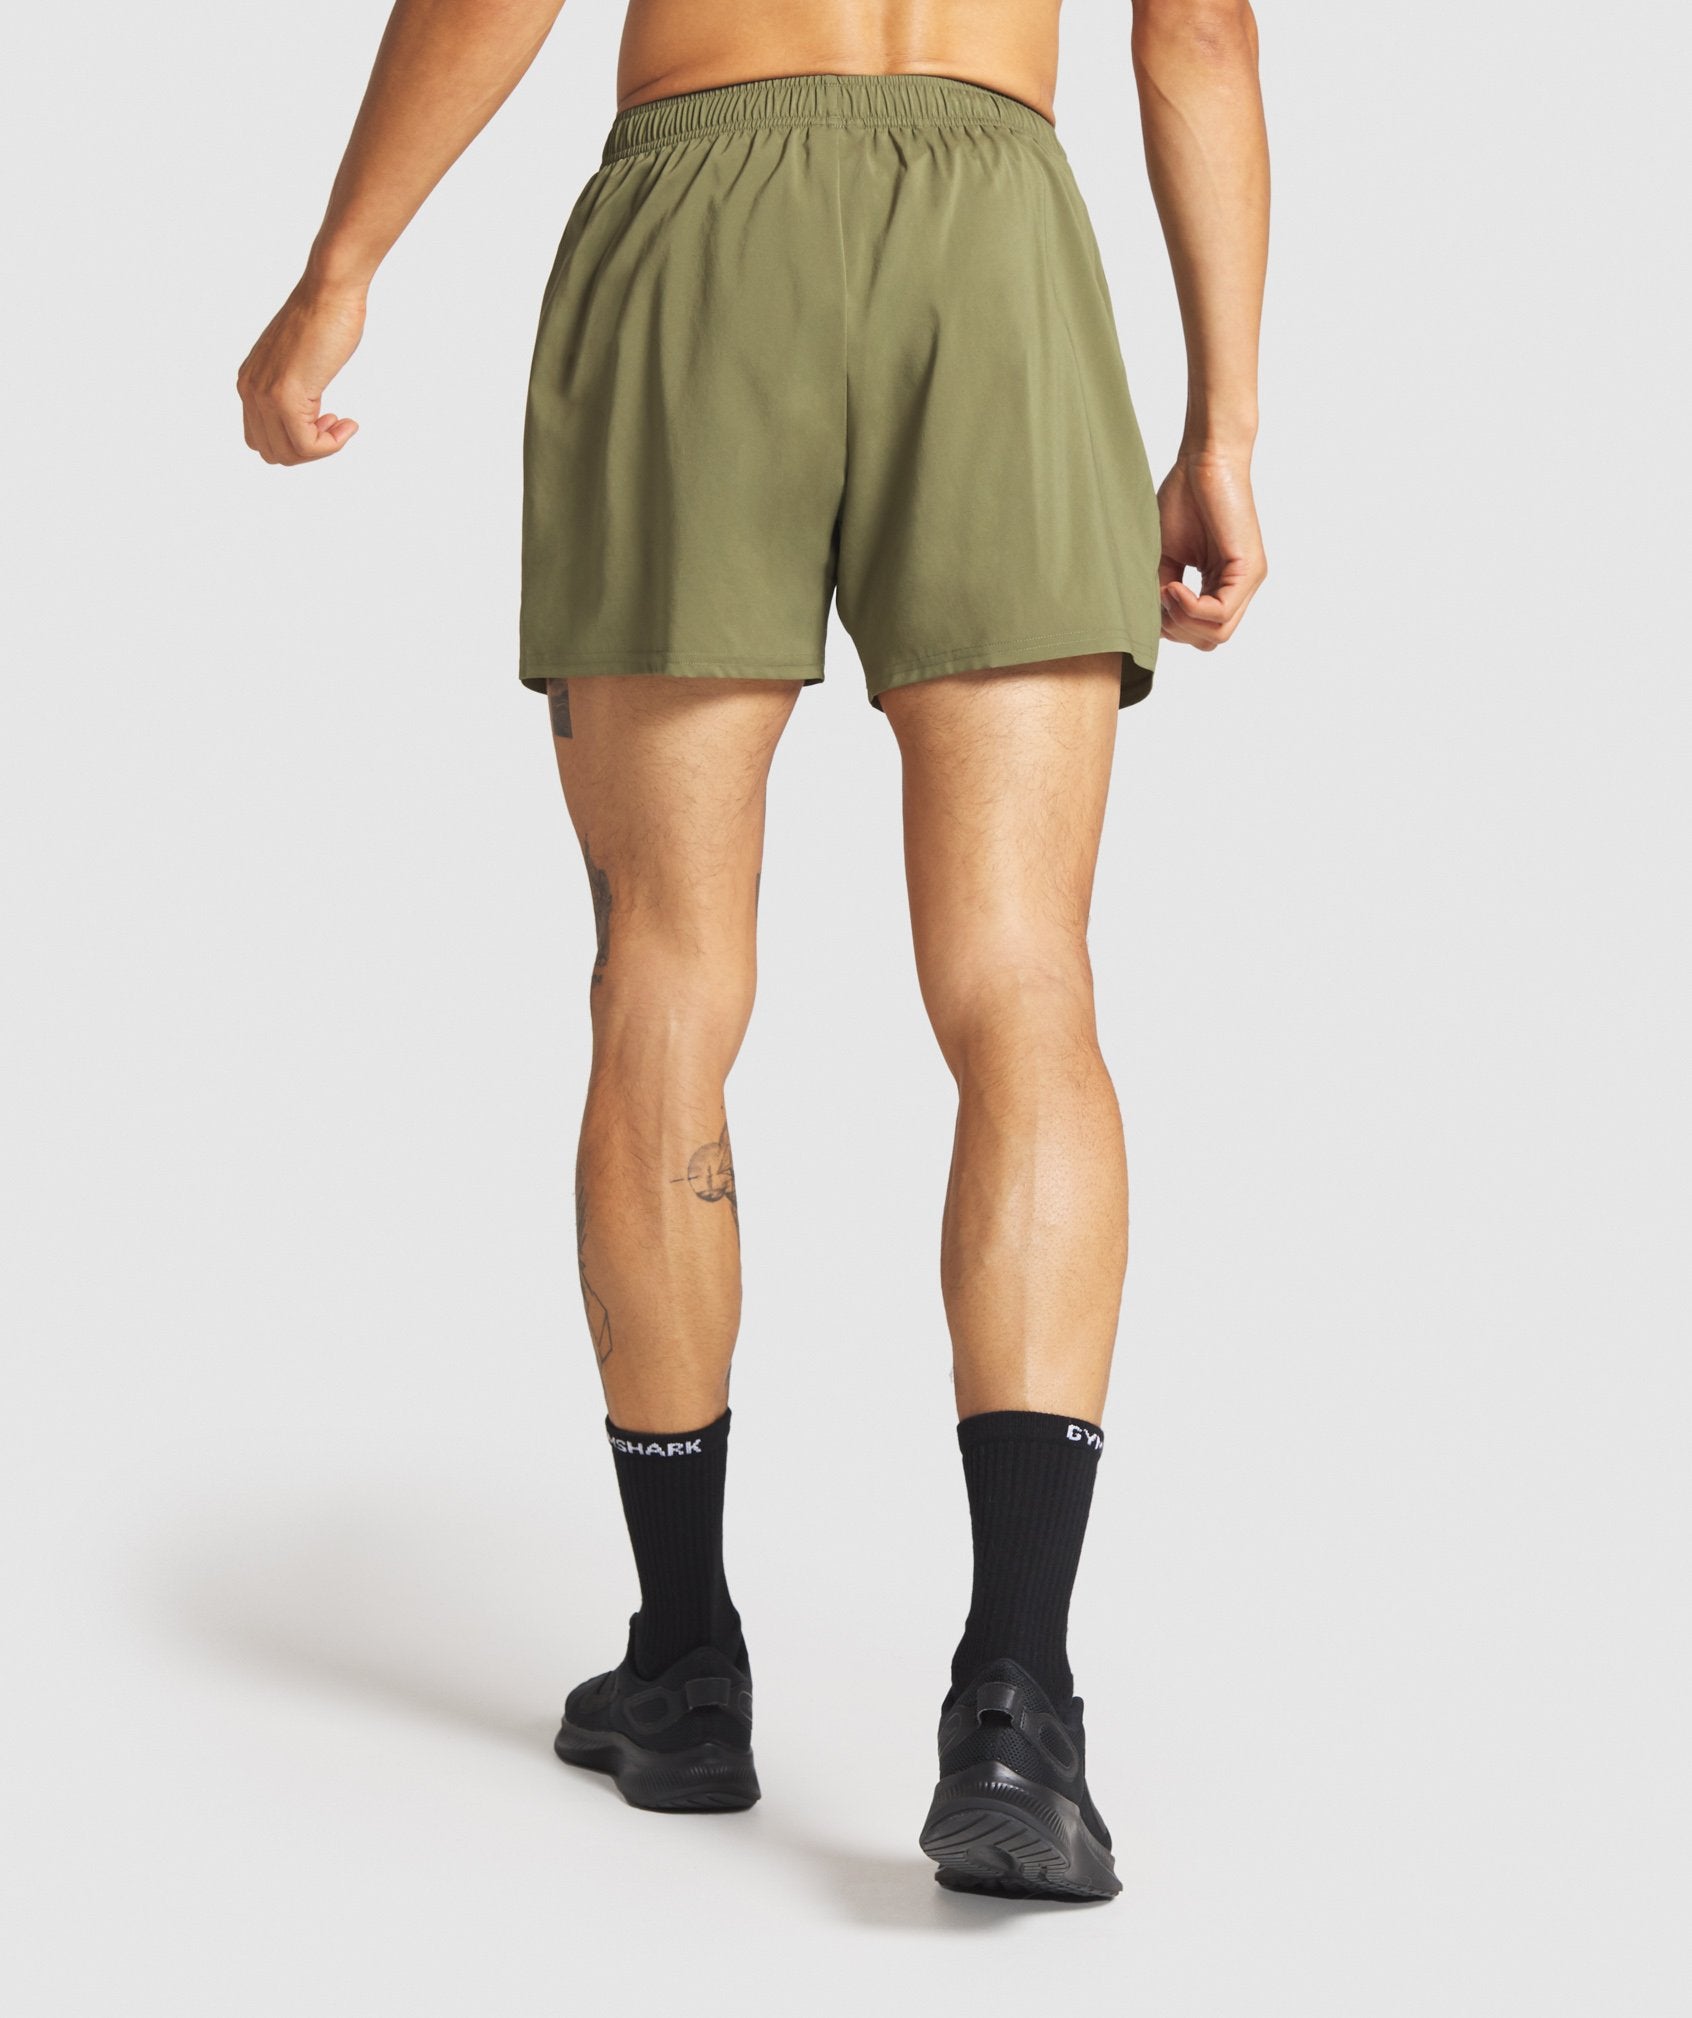 Arrival 5" Zip Pocket Shorts in Dark Green - view 3